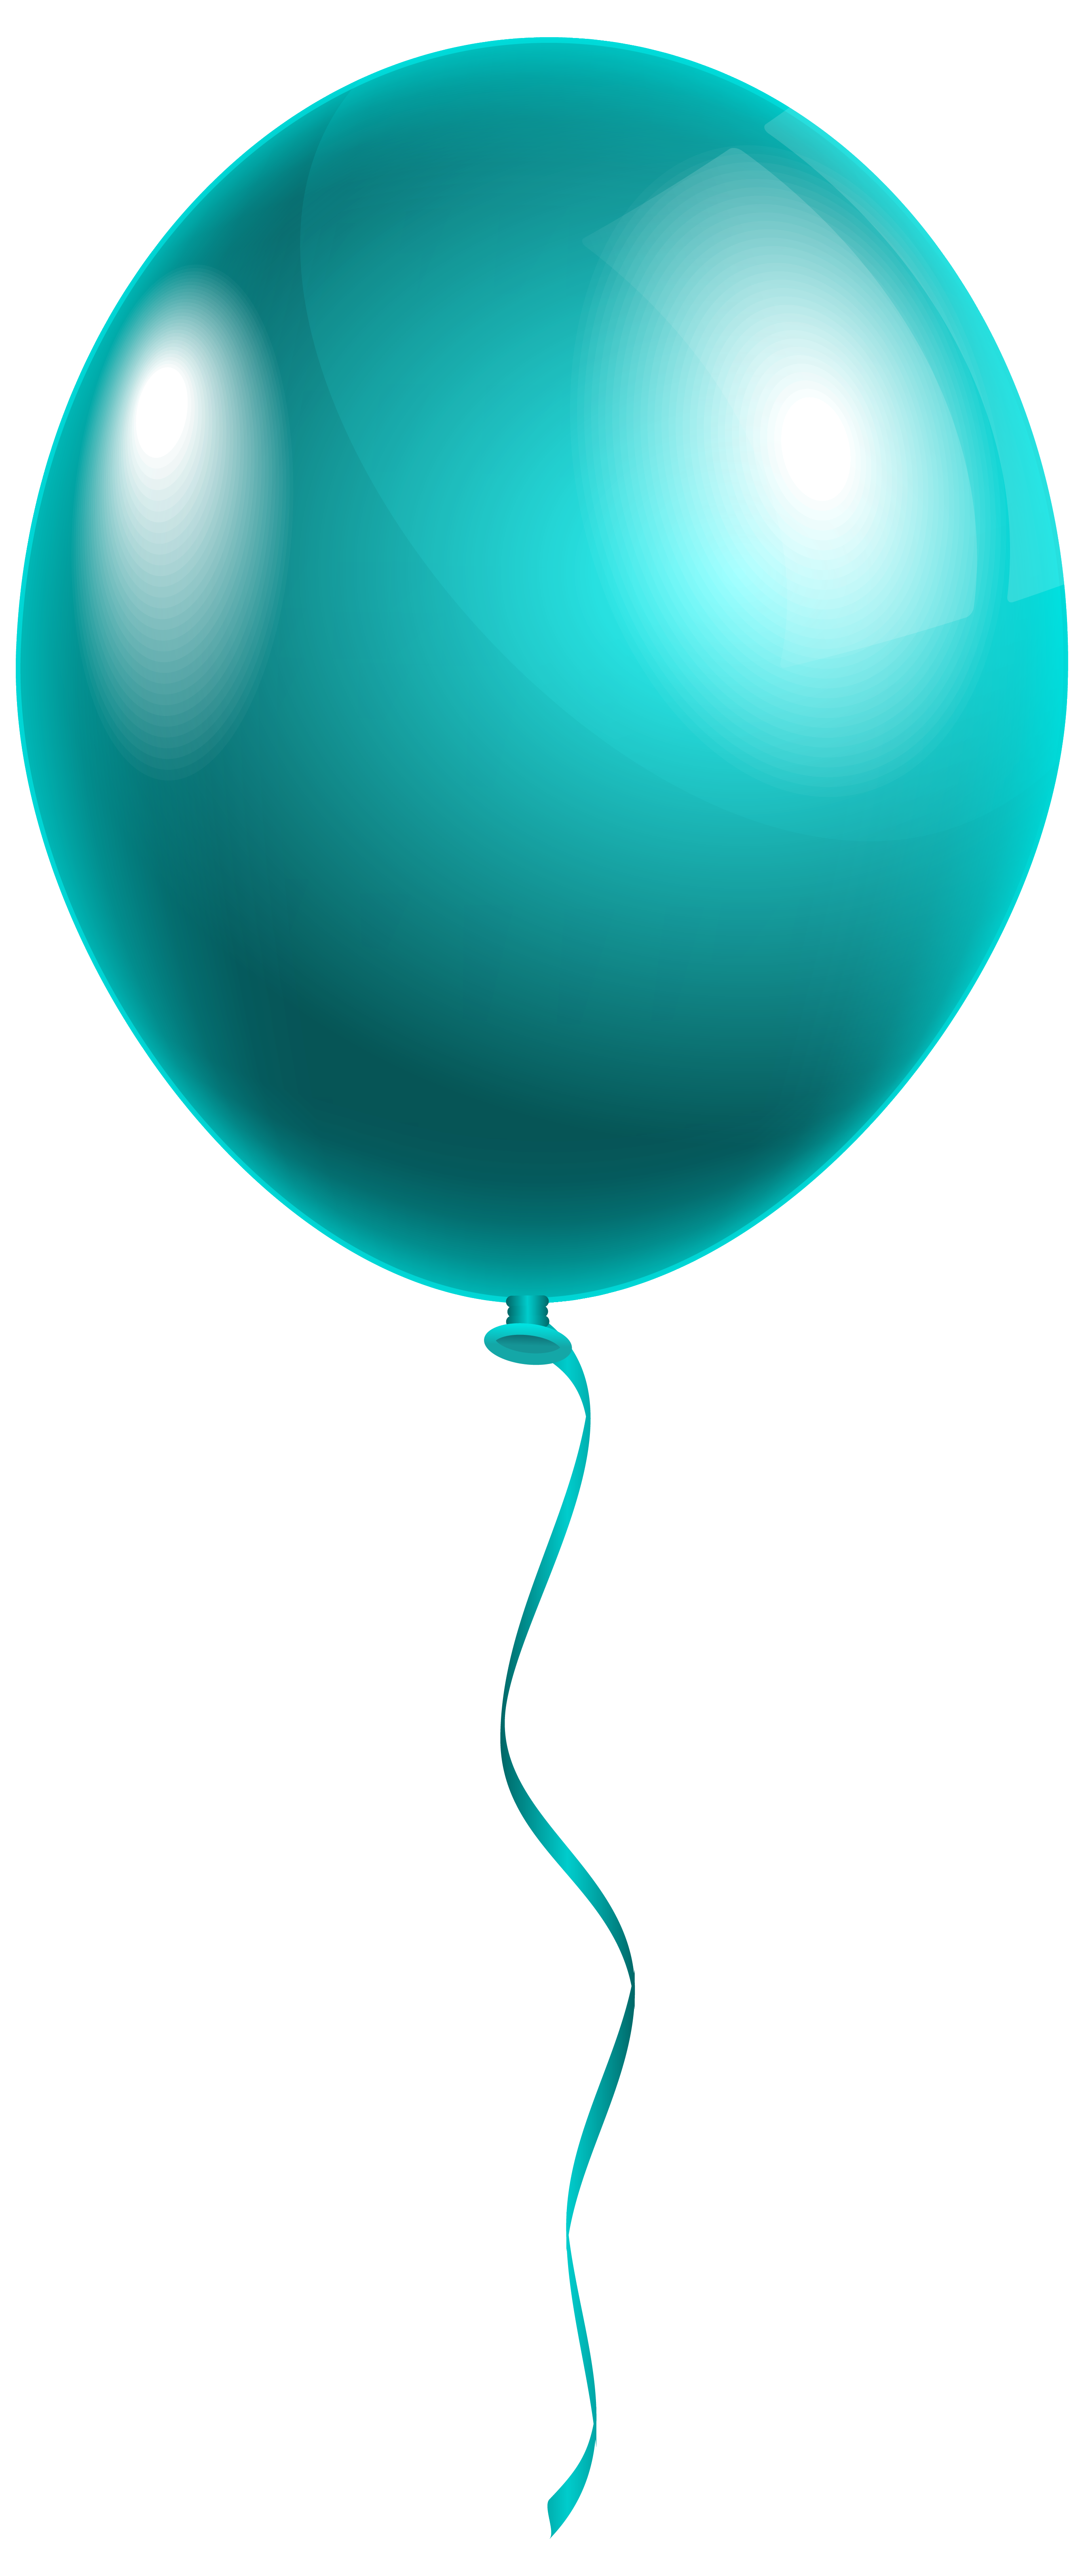 Hands clipart party. Single modern blue balloon